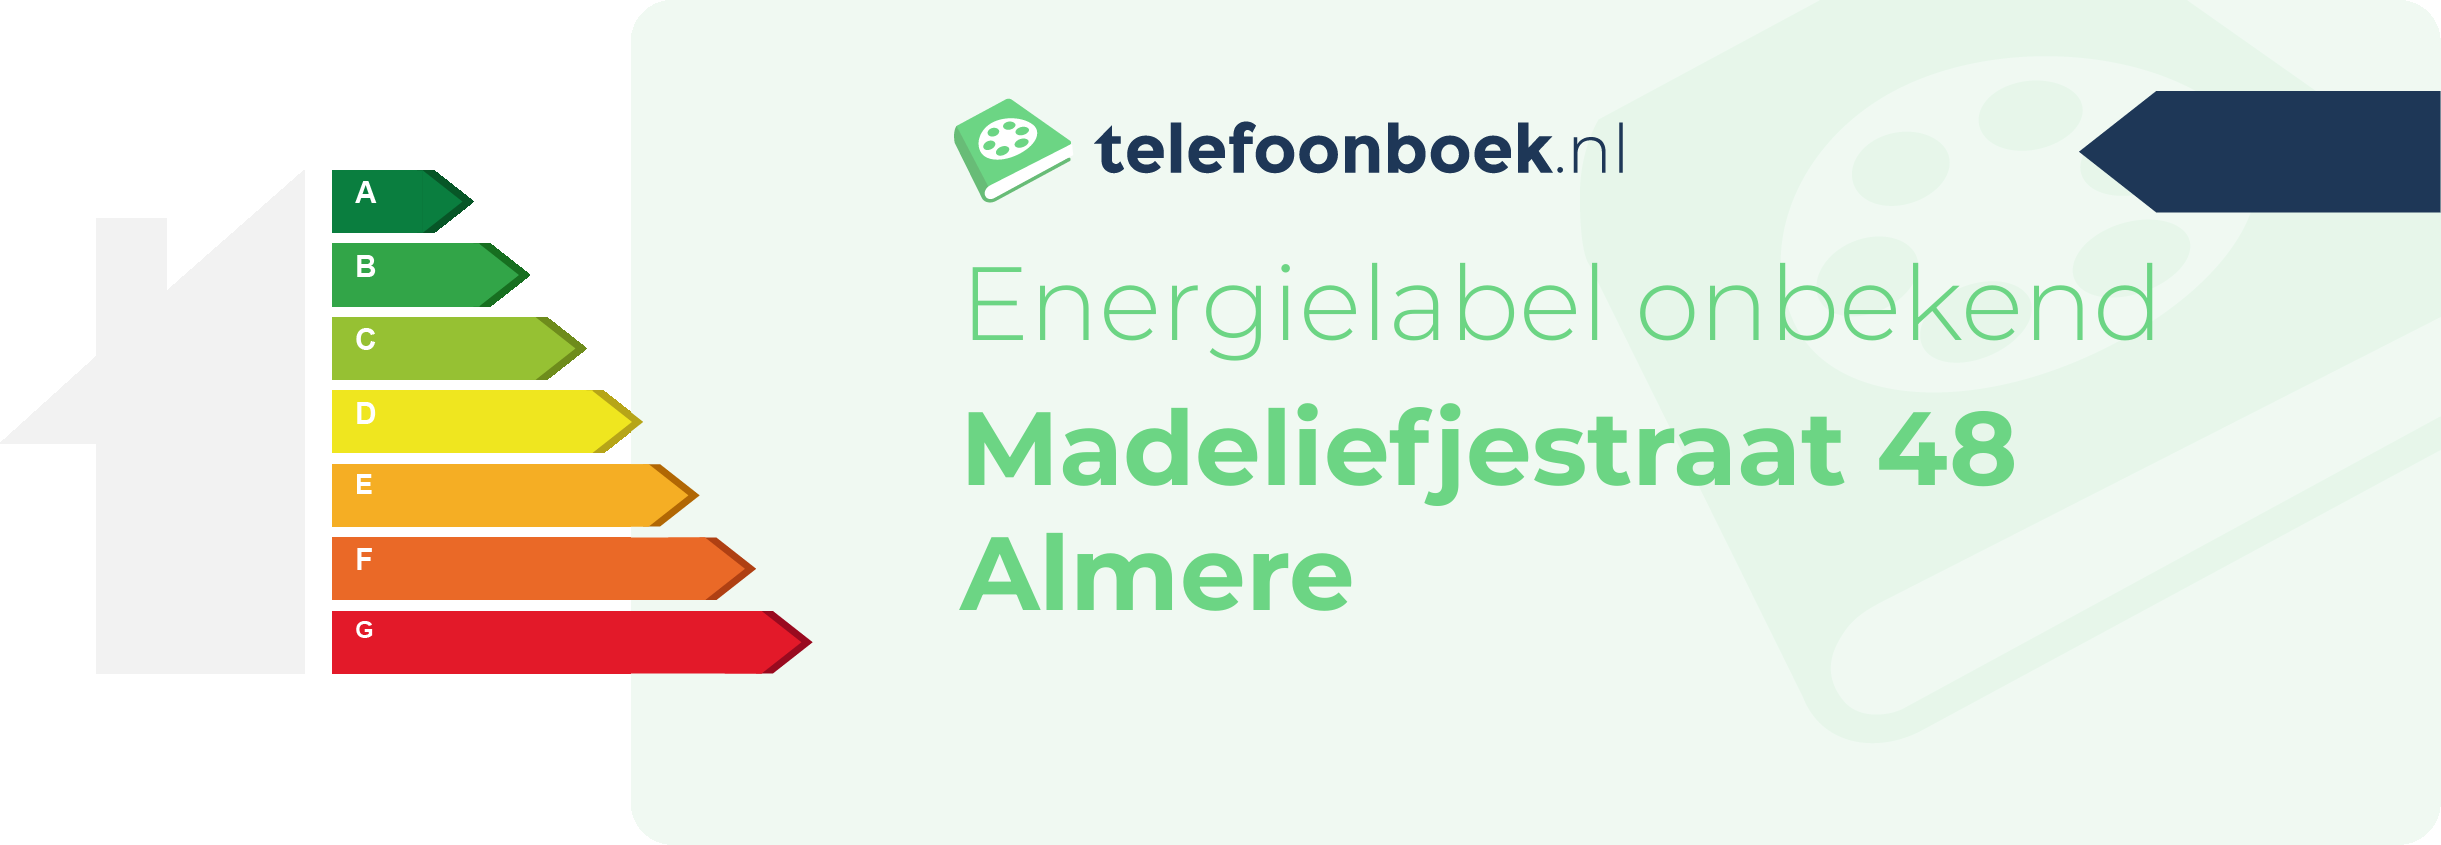 Energielabel Madeliefjestraat 48 Almere